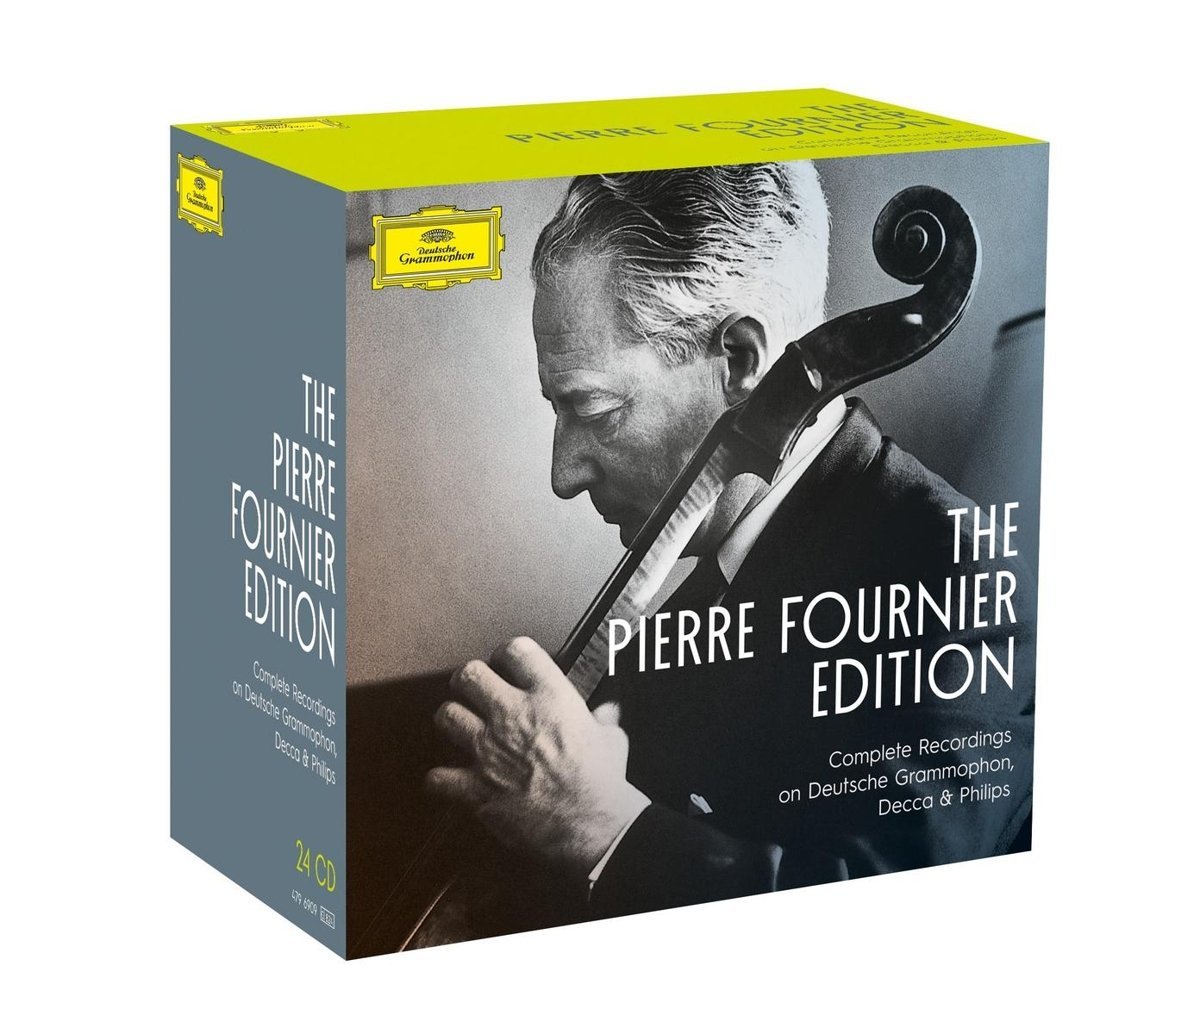 The Pierre Fournier Edition